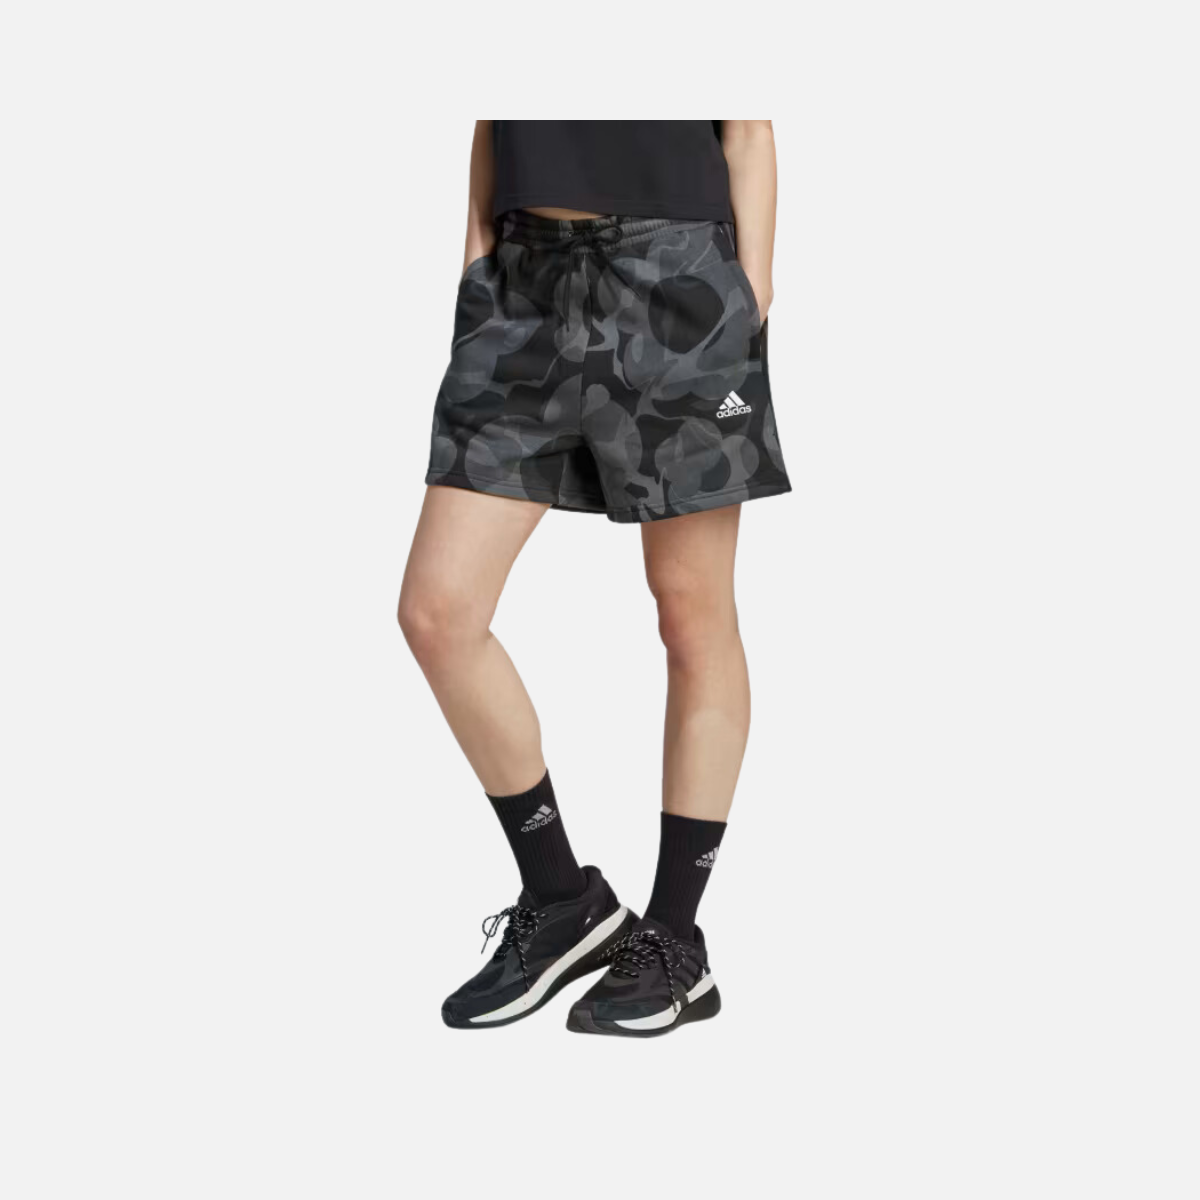 Adidas Floral Graphic 3-Stripes Women's Fleece Shorts -Black/Multicolor